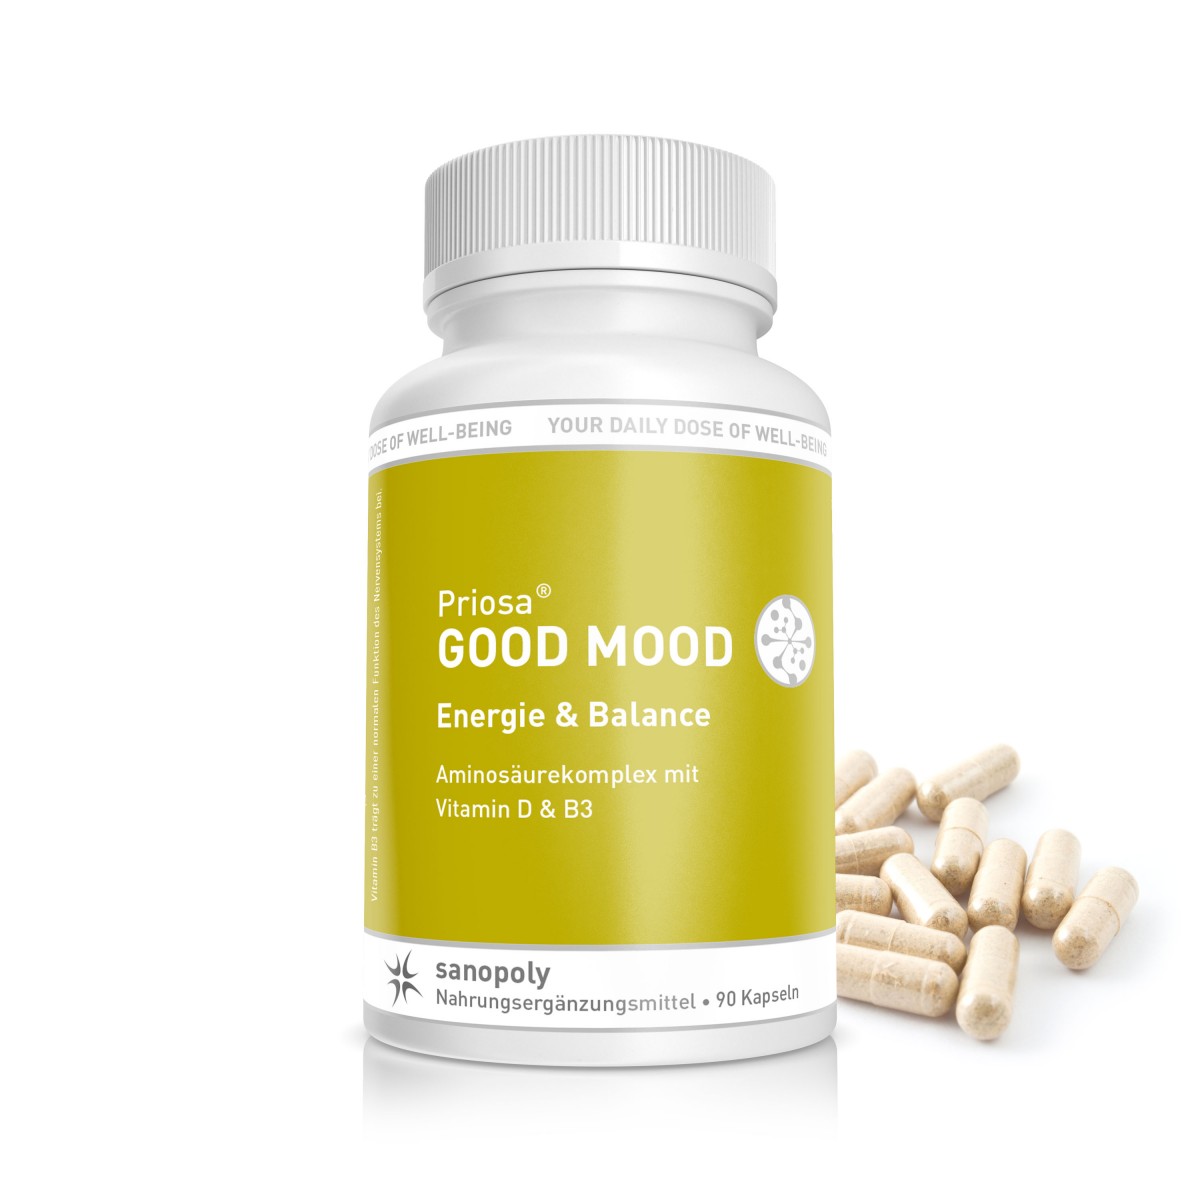 Sanopoly Priosa® GOOD MOOD | 90 Kapseln | Energie & Balance | Aminosäurekomplex mit Vitamin D & B3